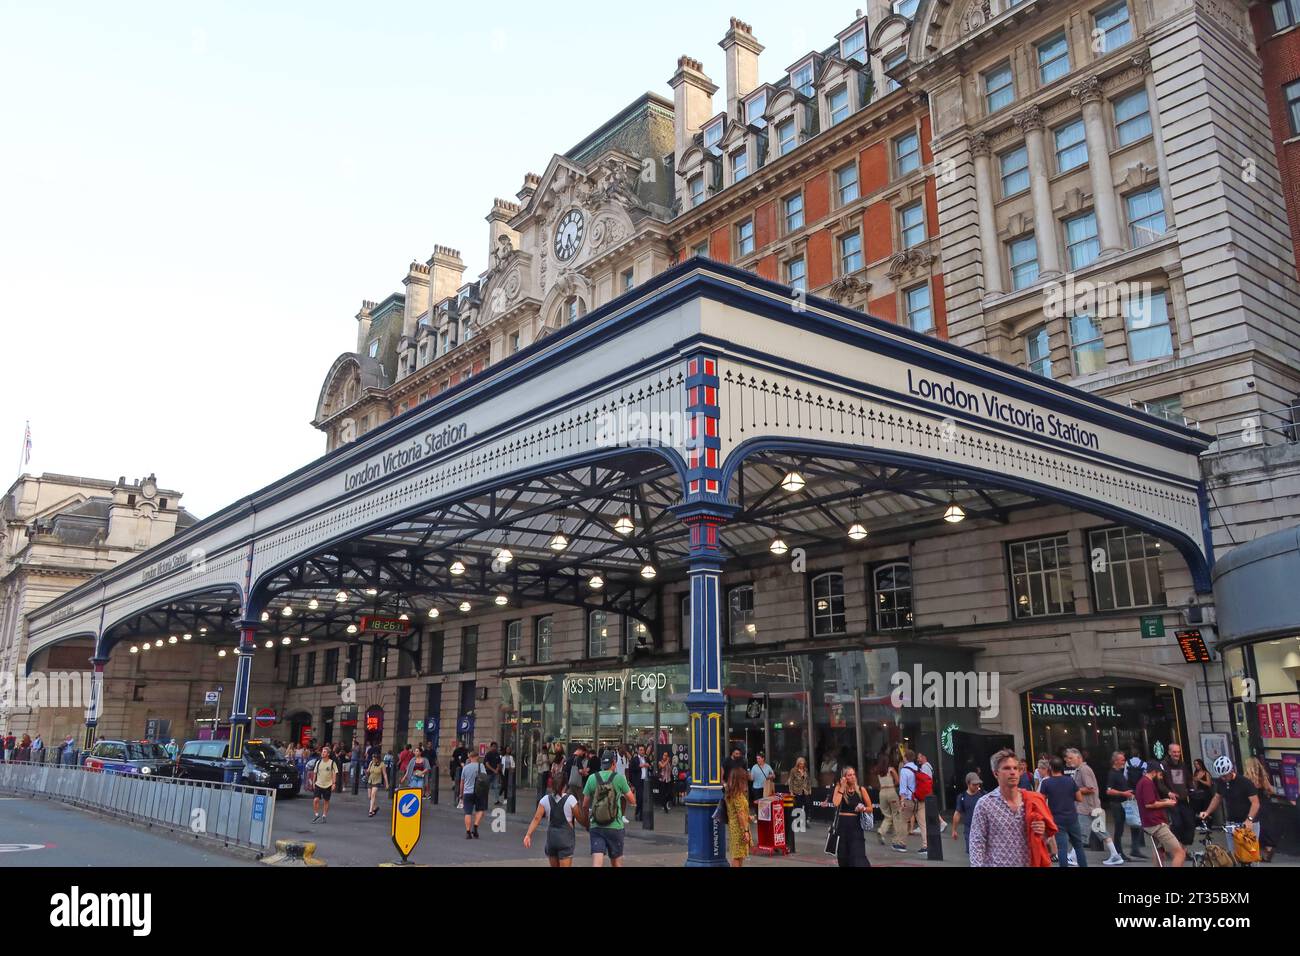 London Victoria Station entrance, Victoria St, London, England, UK,  SW1E 5ND Stock Photo